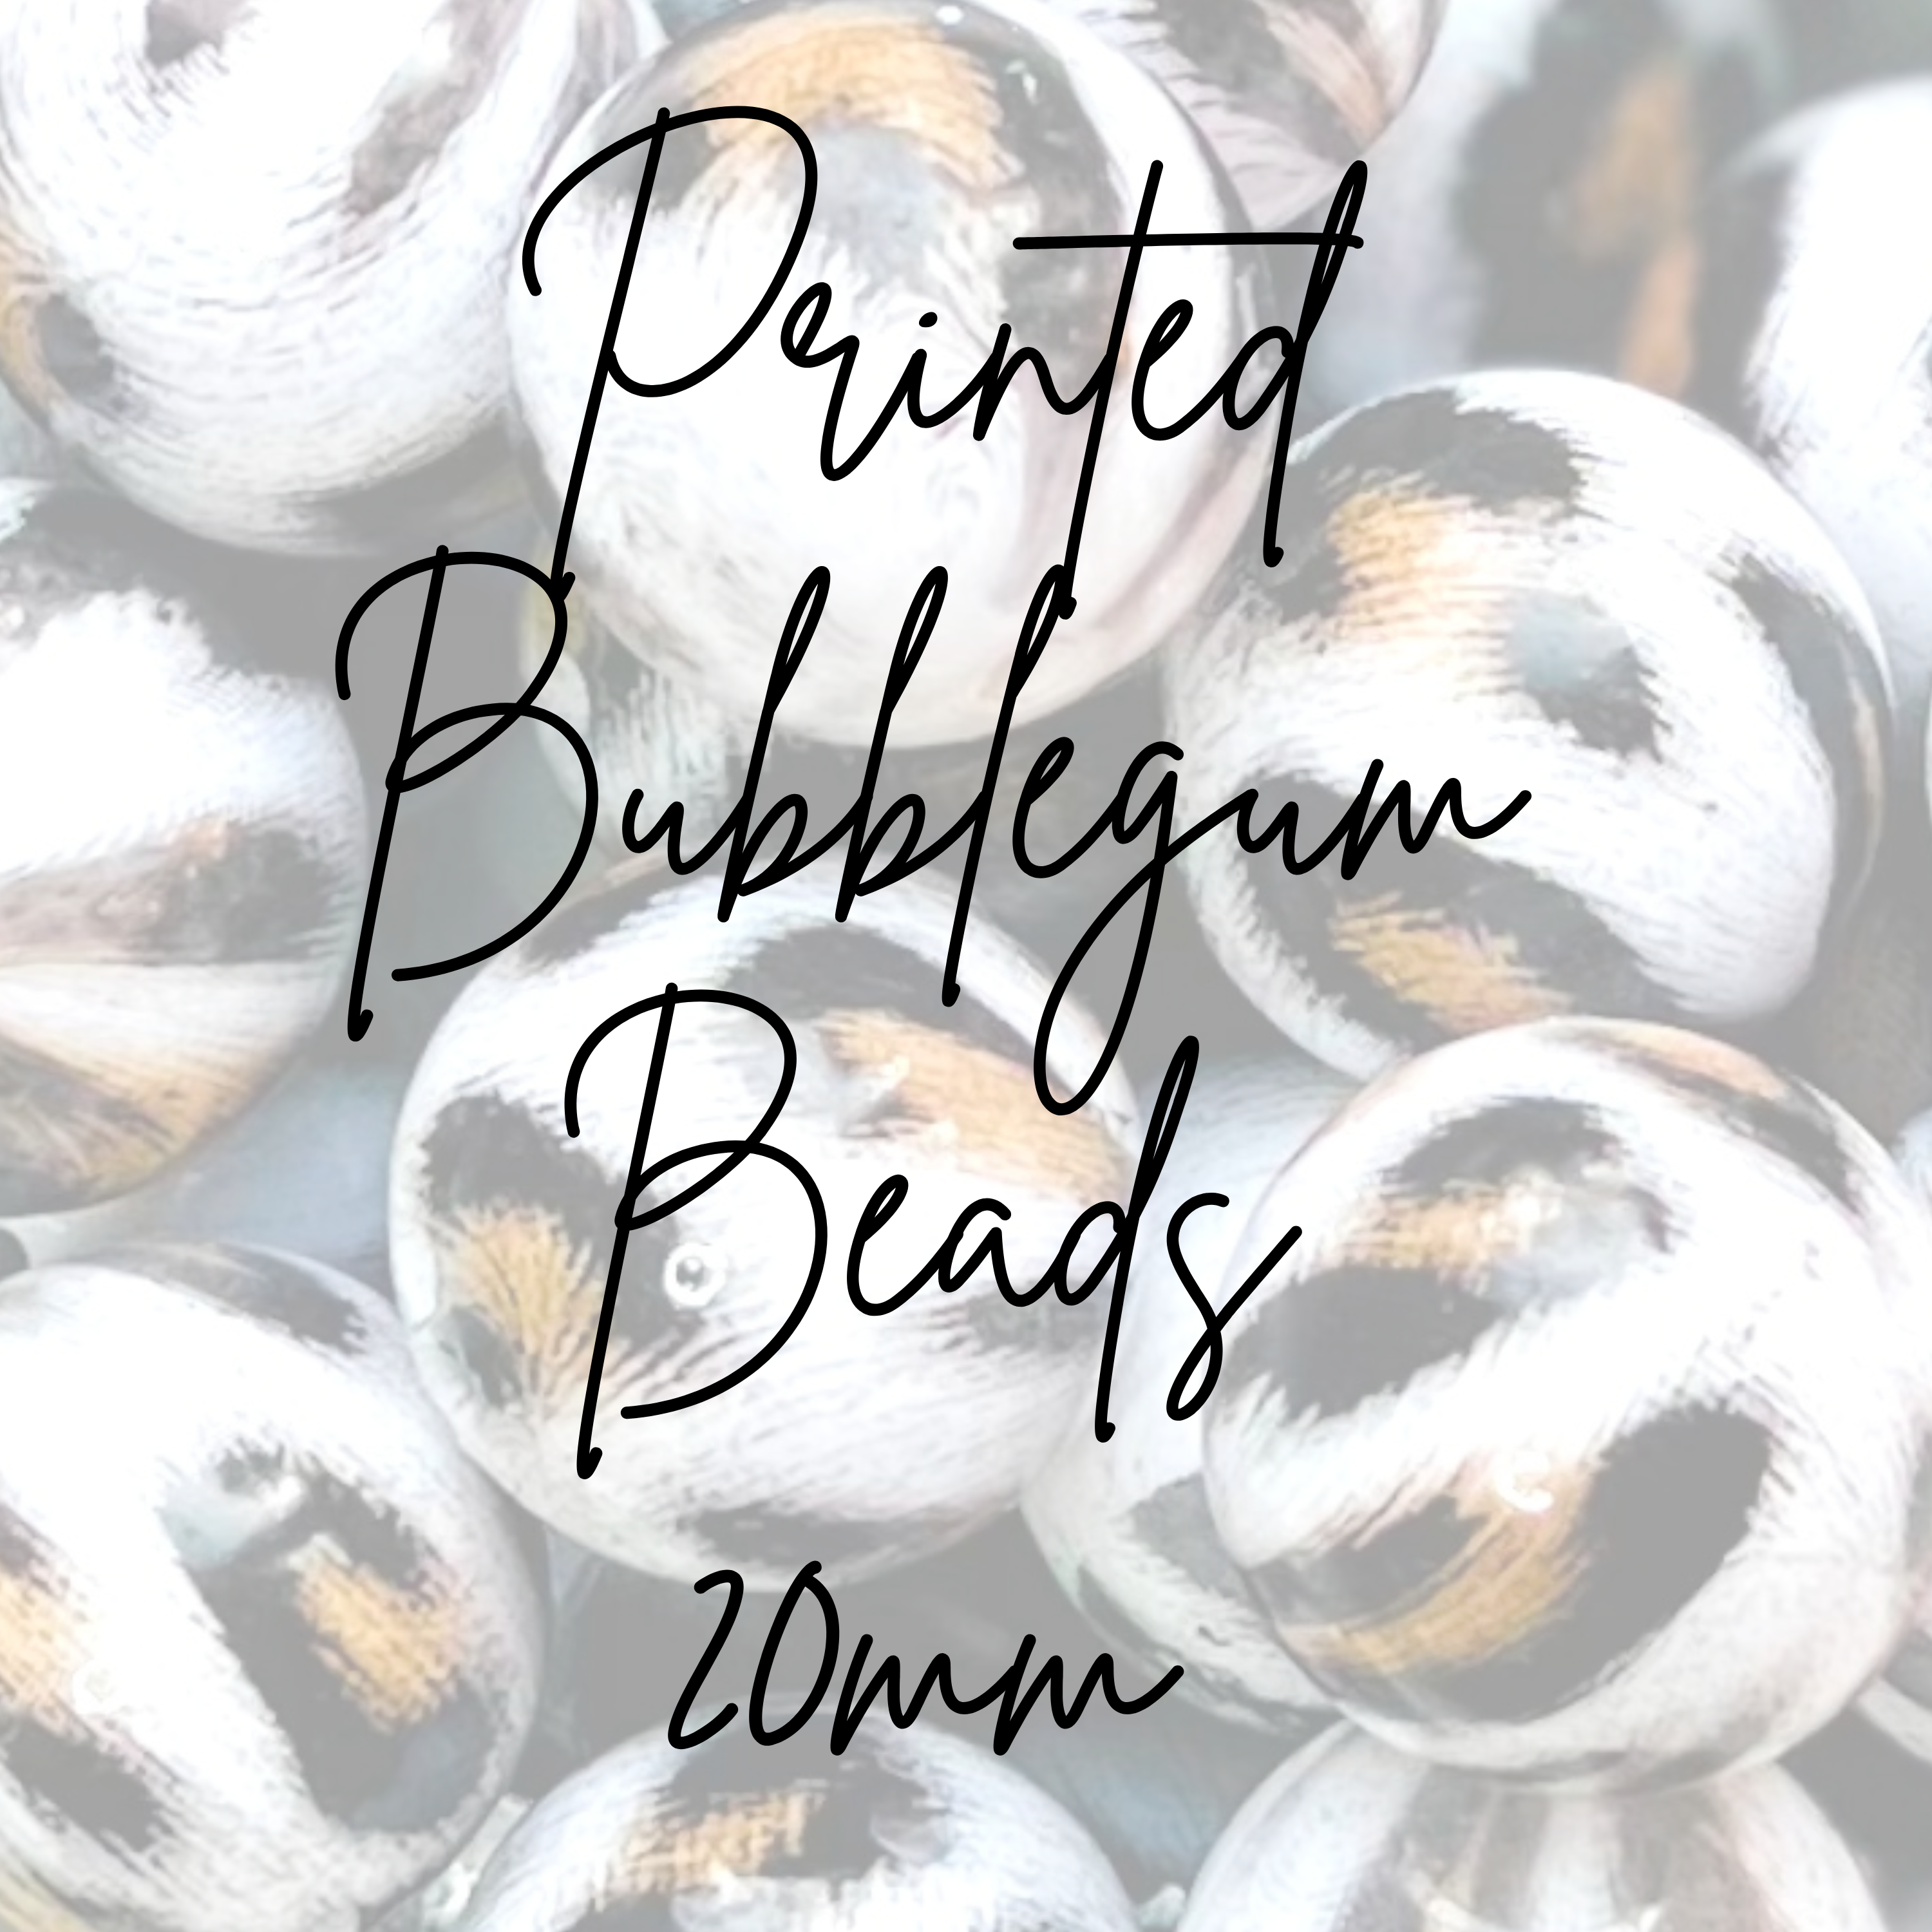 50 Qty 20mm Beads - Colorful theme Beads, Bubblegum Beads - Acrylic Beads -  #84